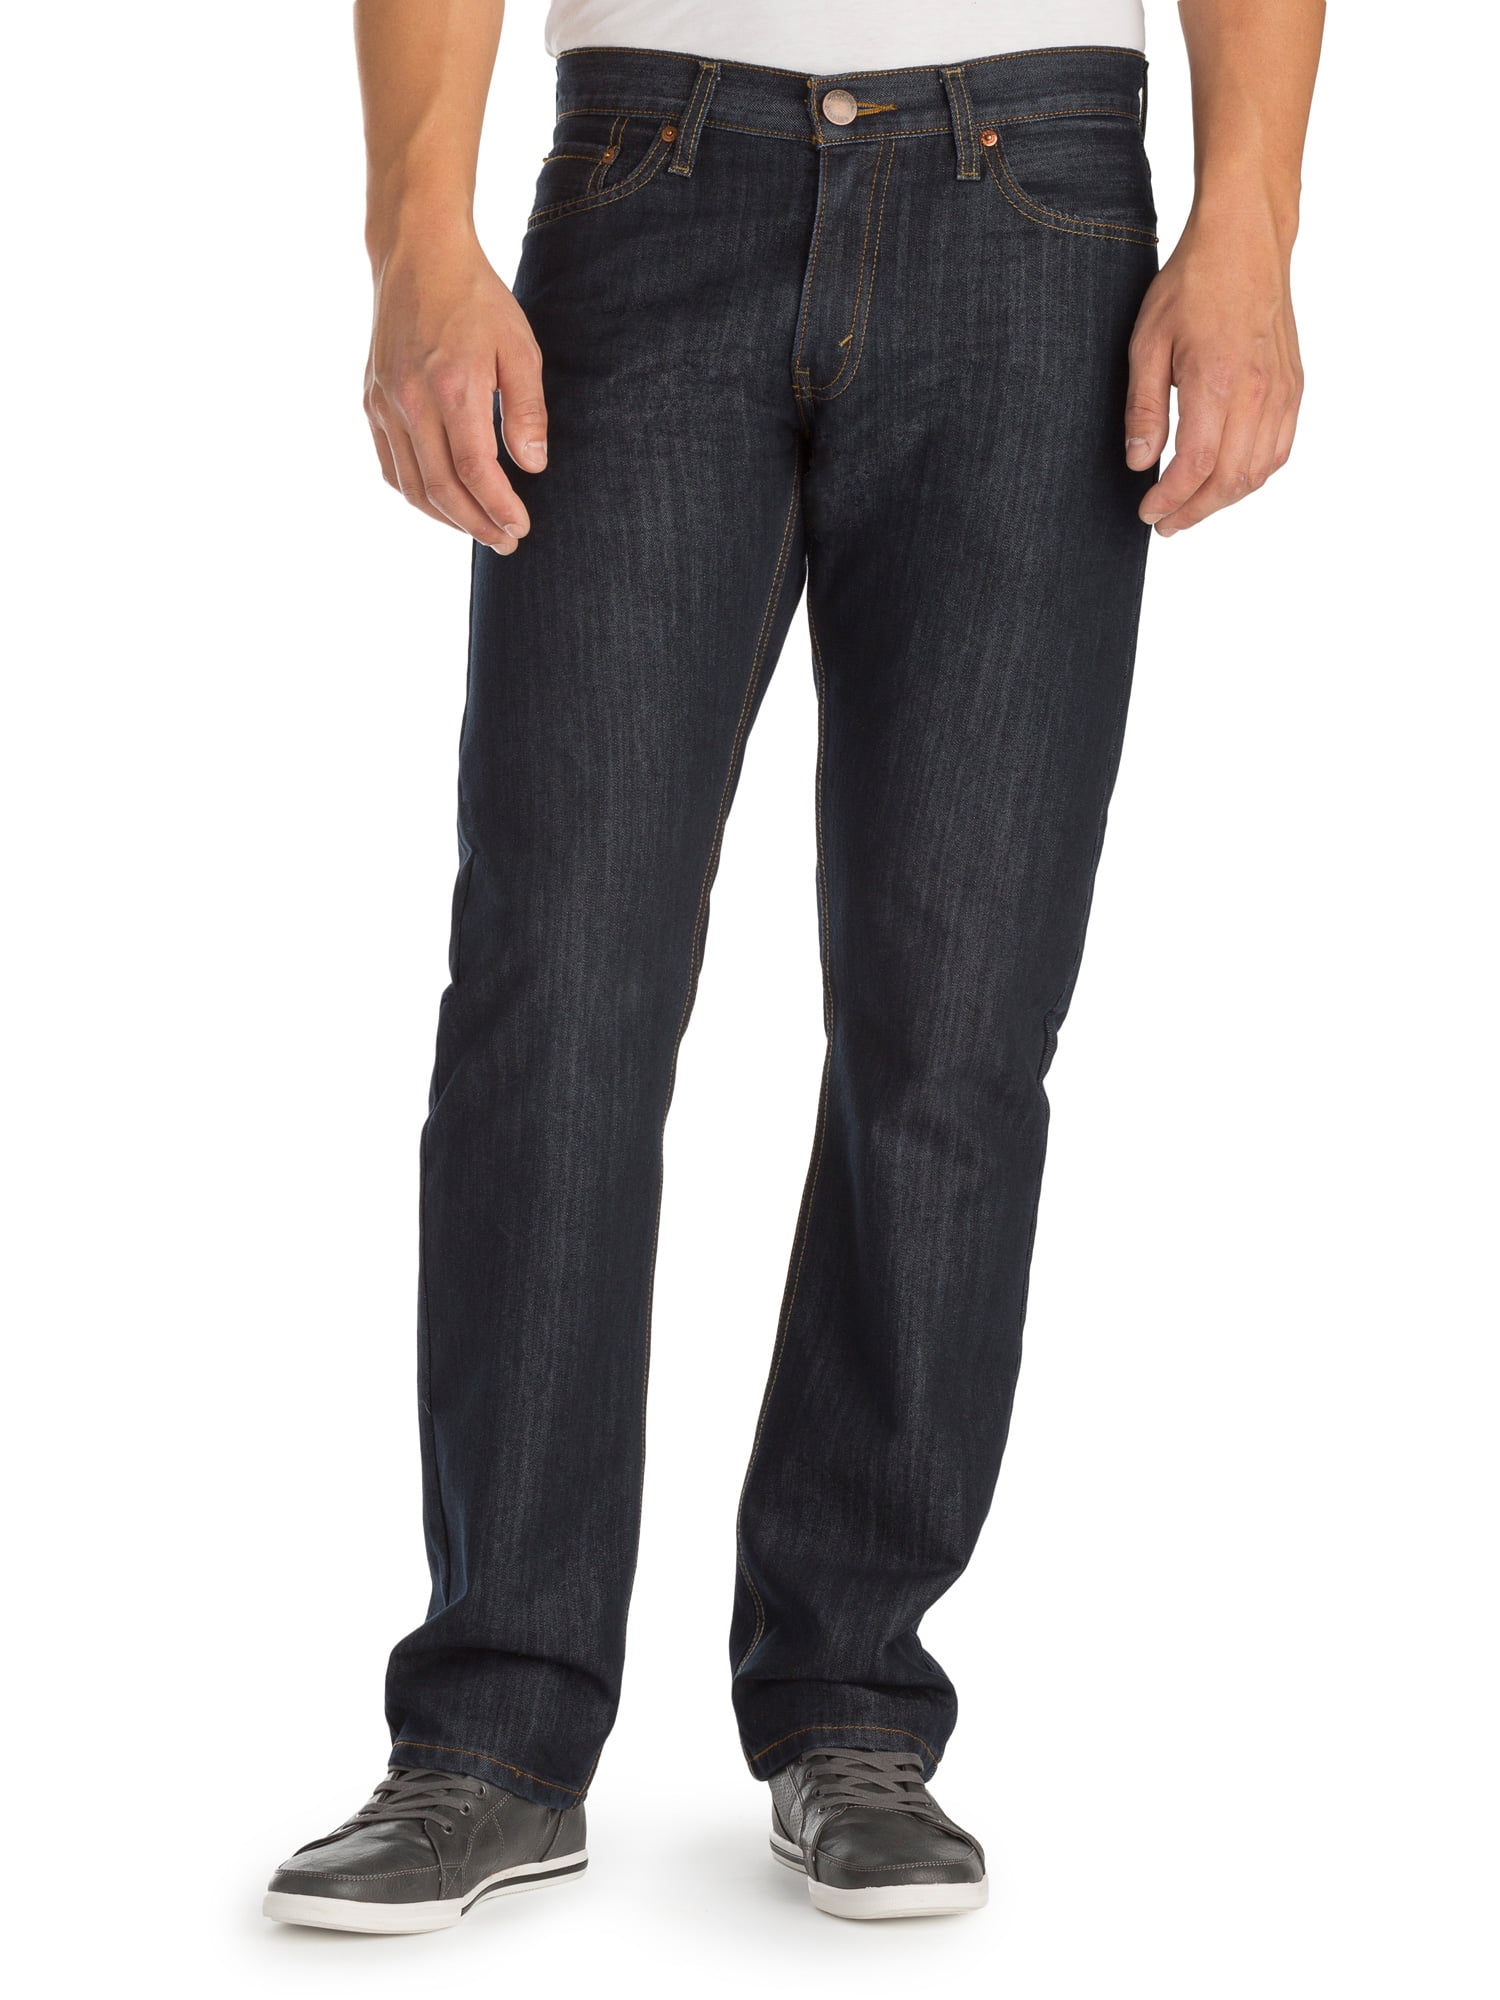 Men's Slim Straight Jeans - Walmart.com